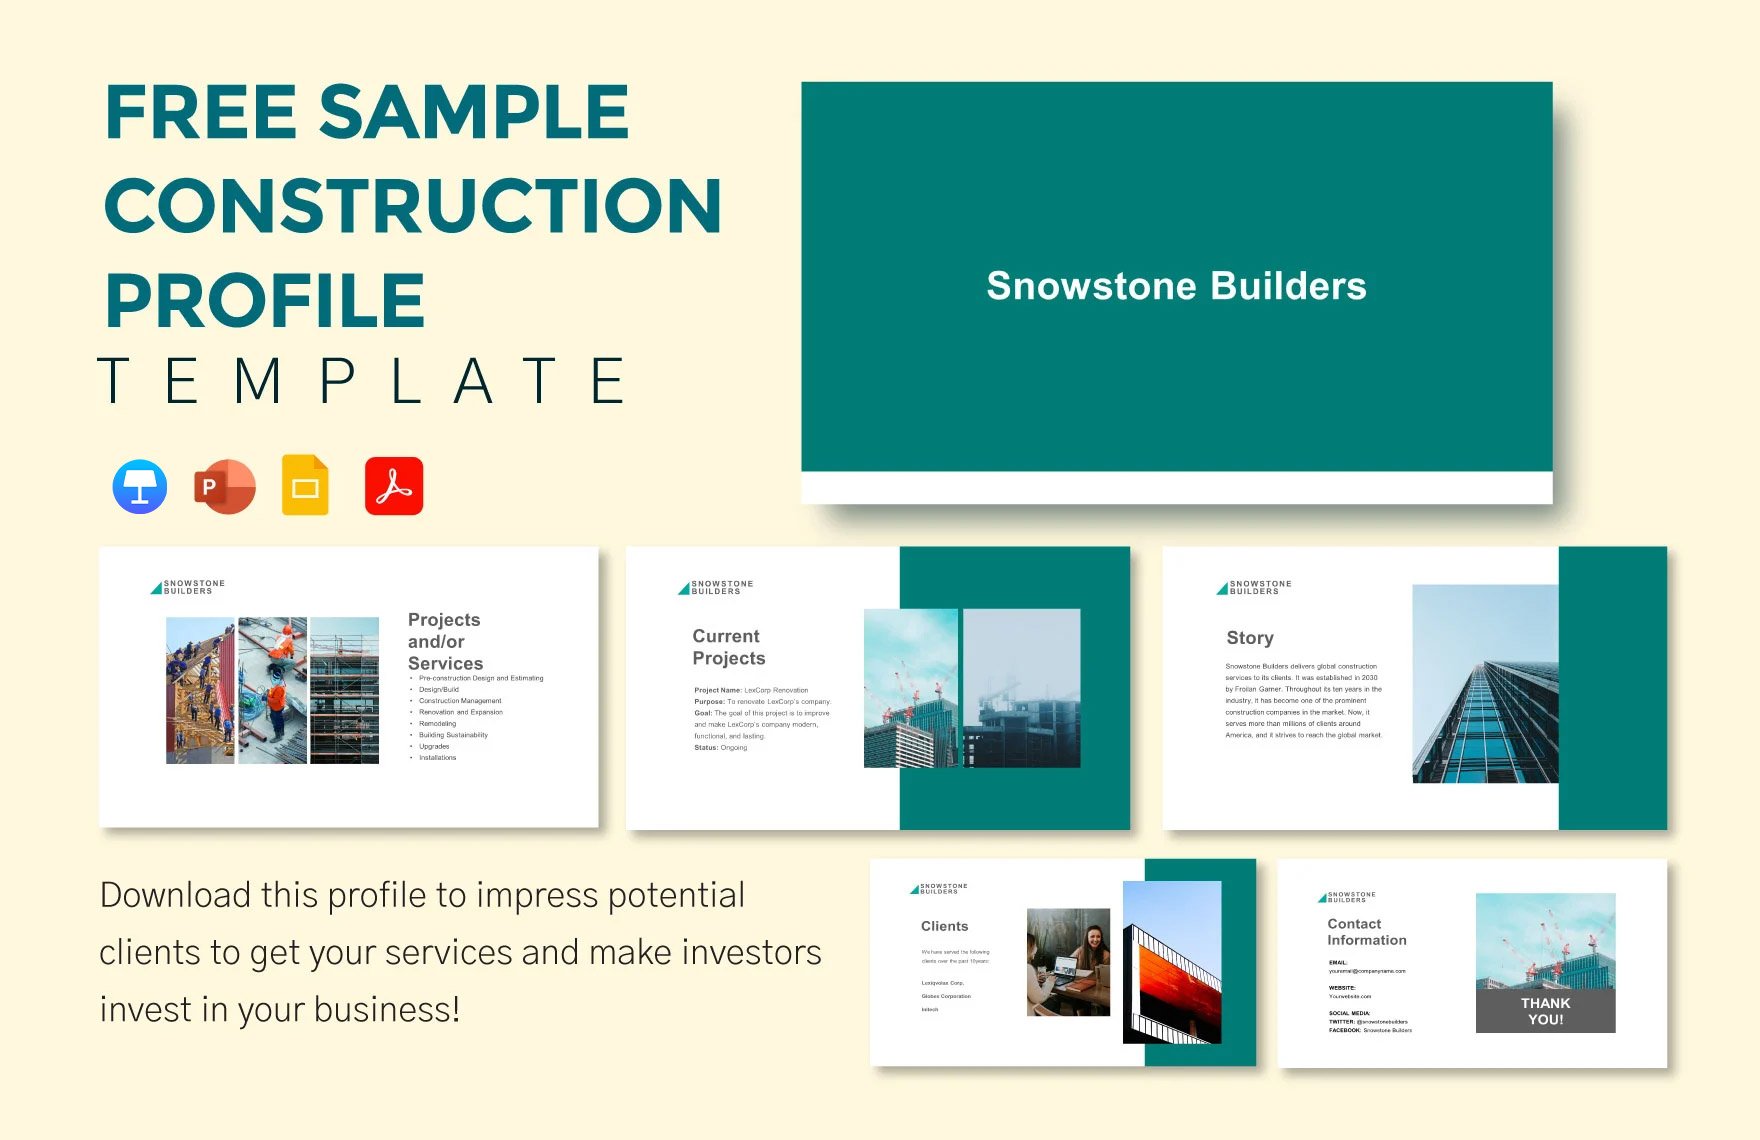 Sample Construction Profile Template